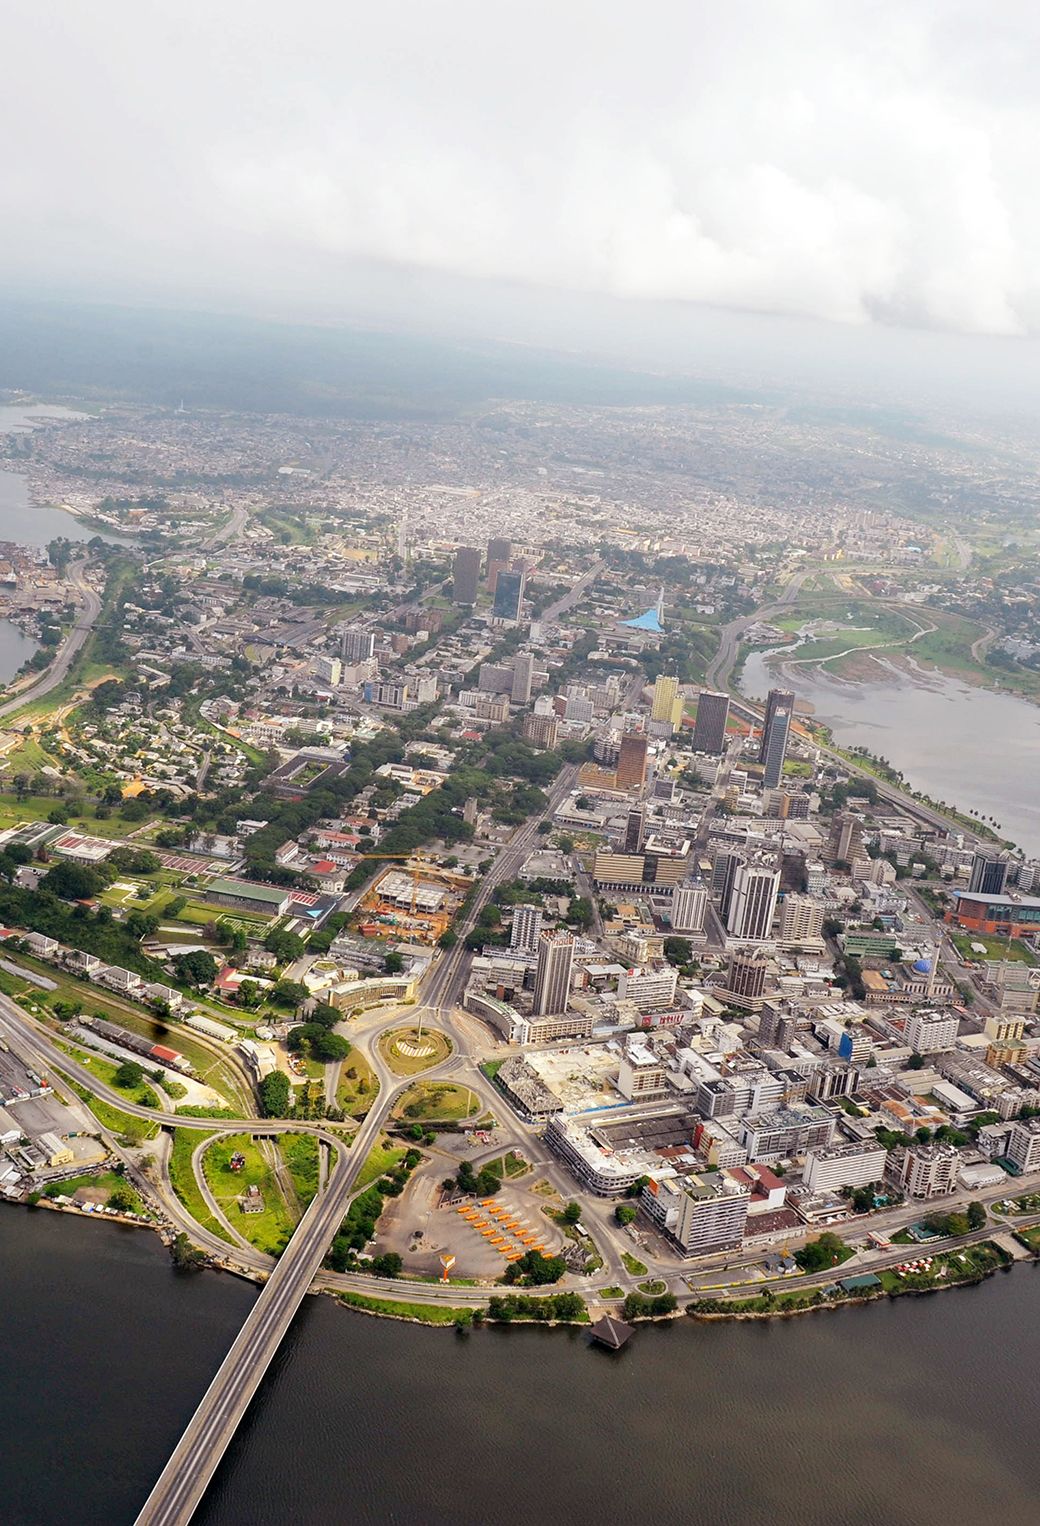 Aerial View of Abidjan Wallpaper for iPhone Pro Max, X, 7